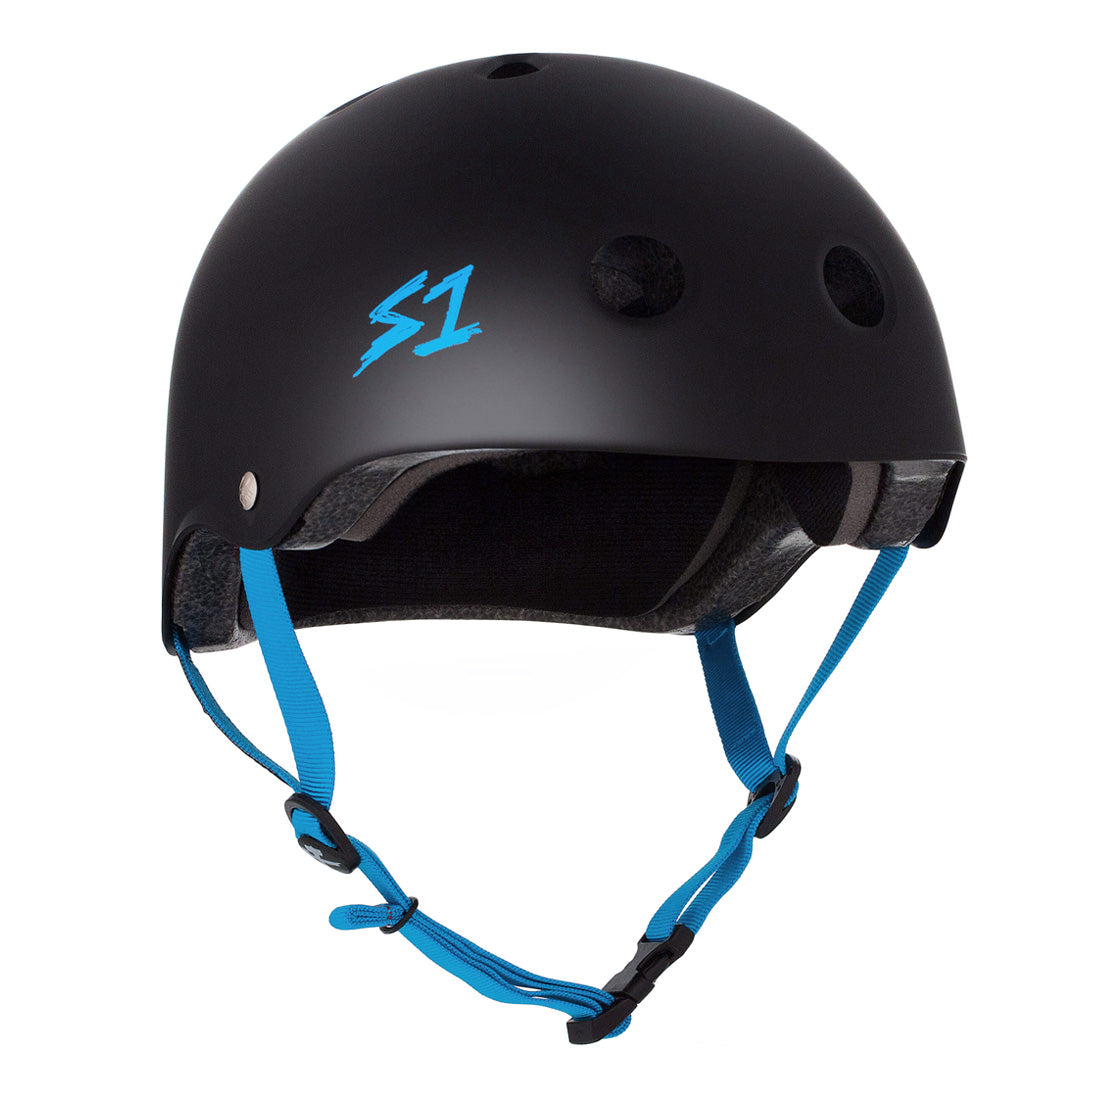 S-One Lifer Helmet - Black/Cyan Matte Helmets